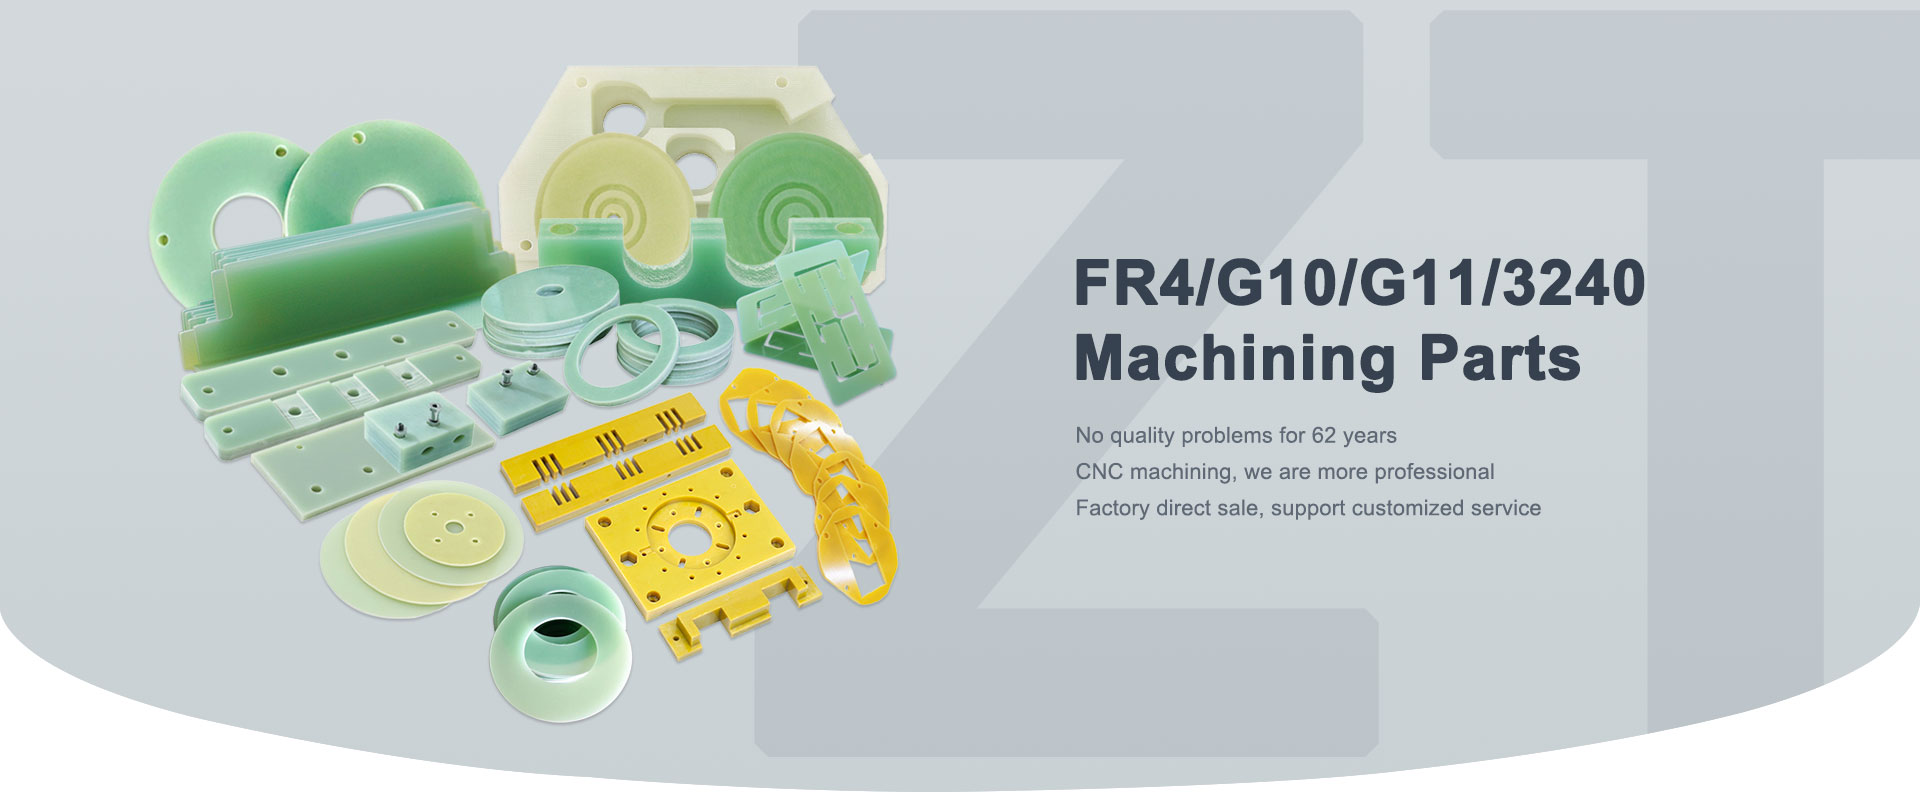 fr4 sheet machining parts,g10 material processing parts,epoxy